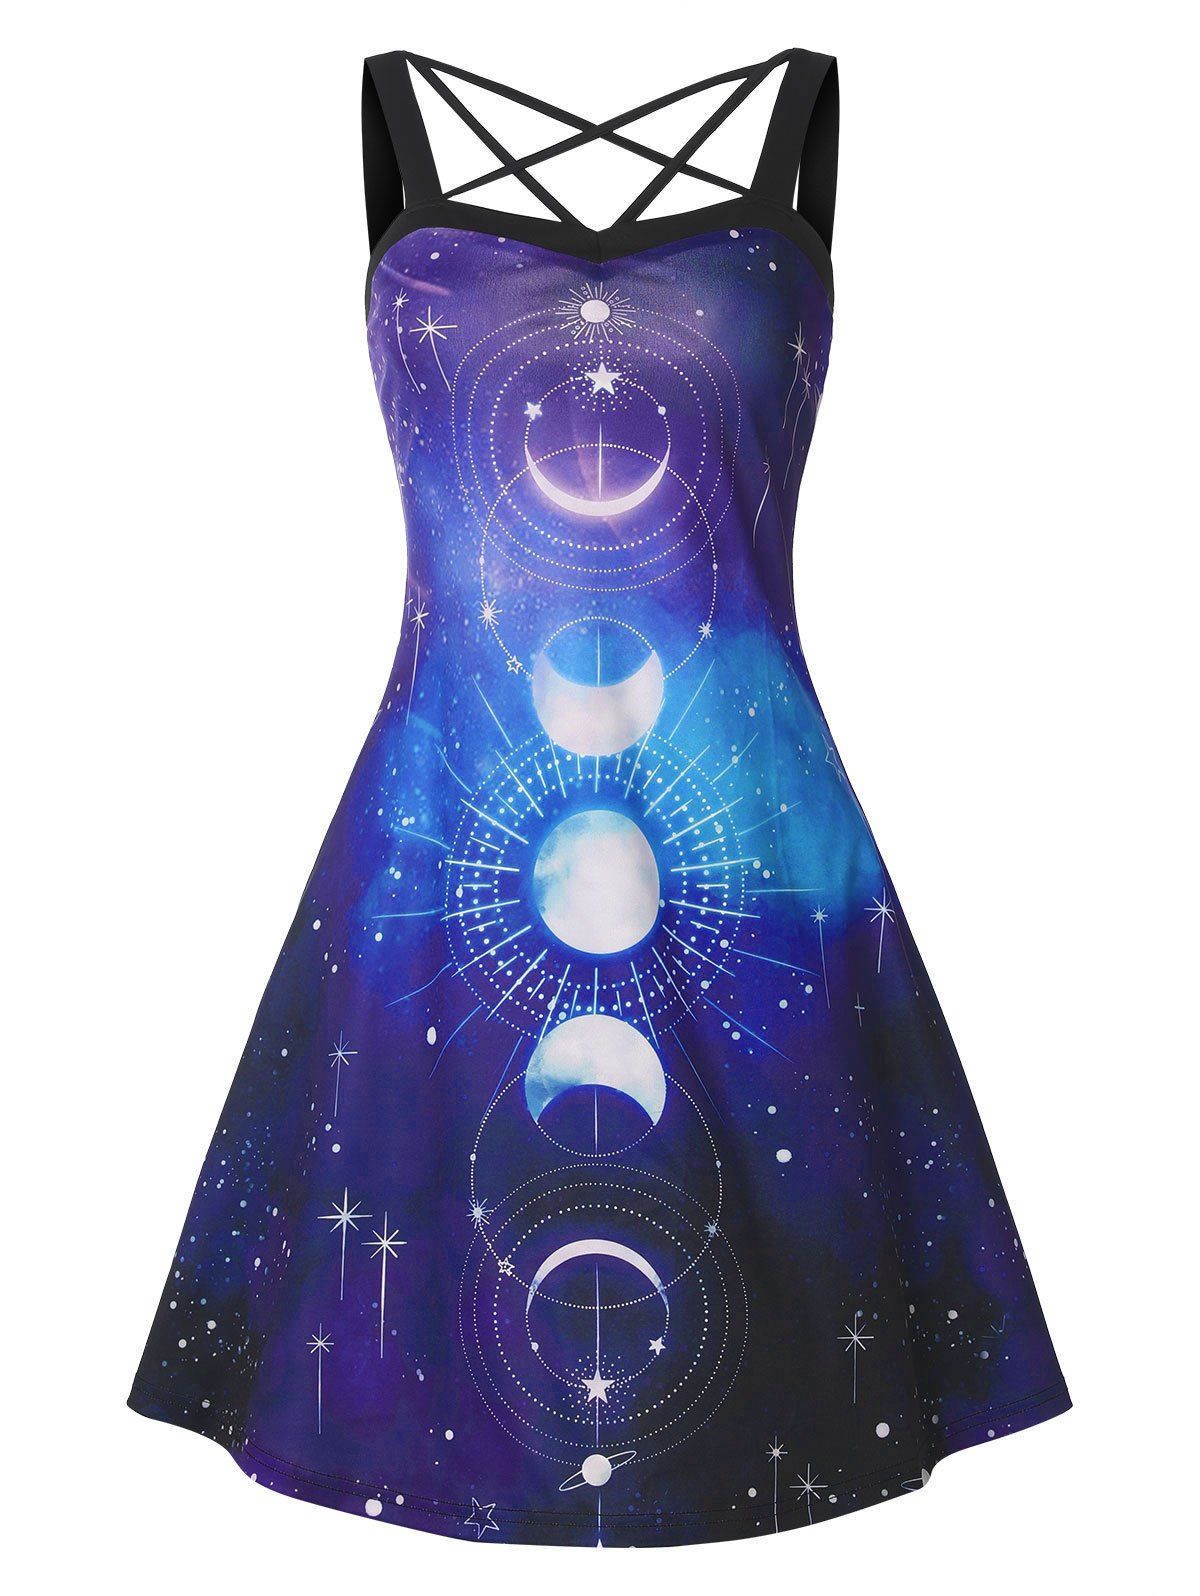 Moon Phase Galaxy Print Crisscross Dress - multicolor L